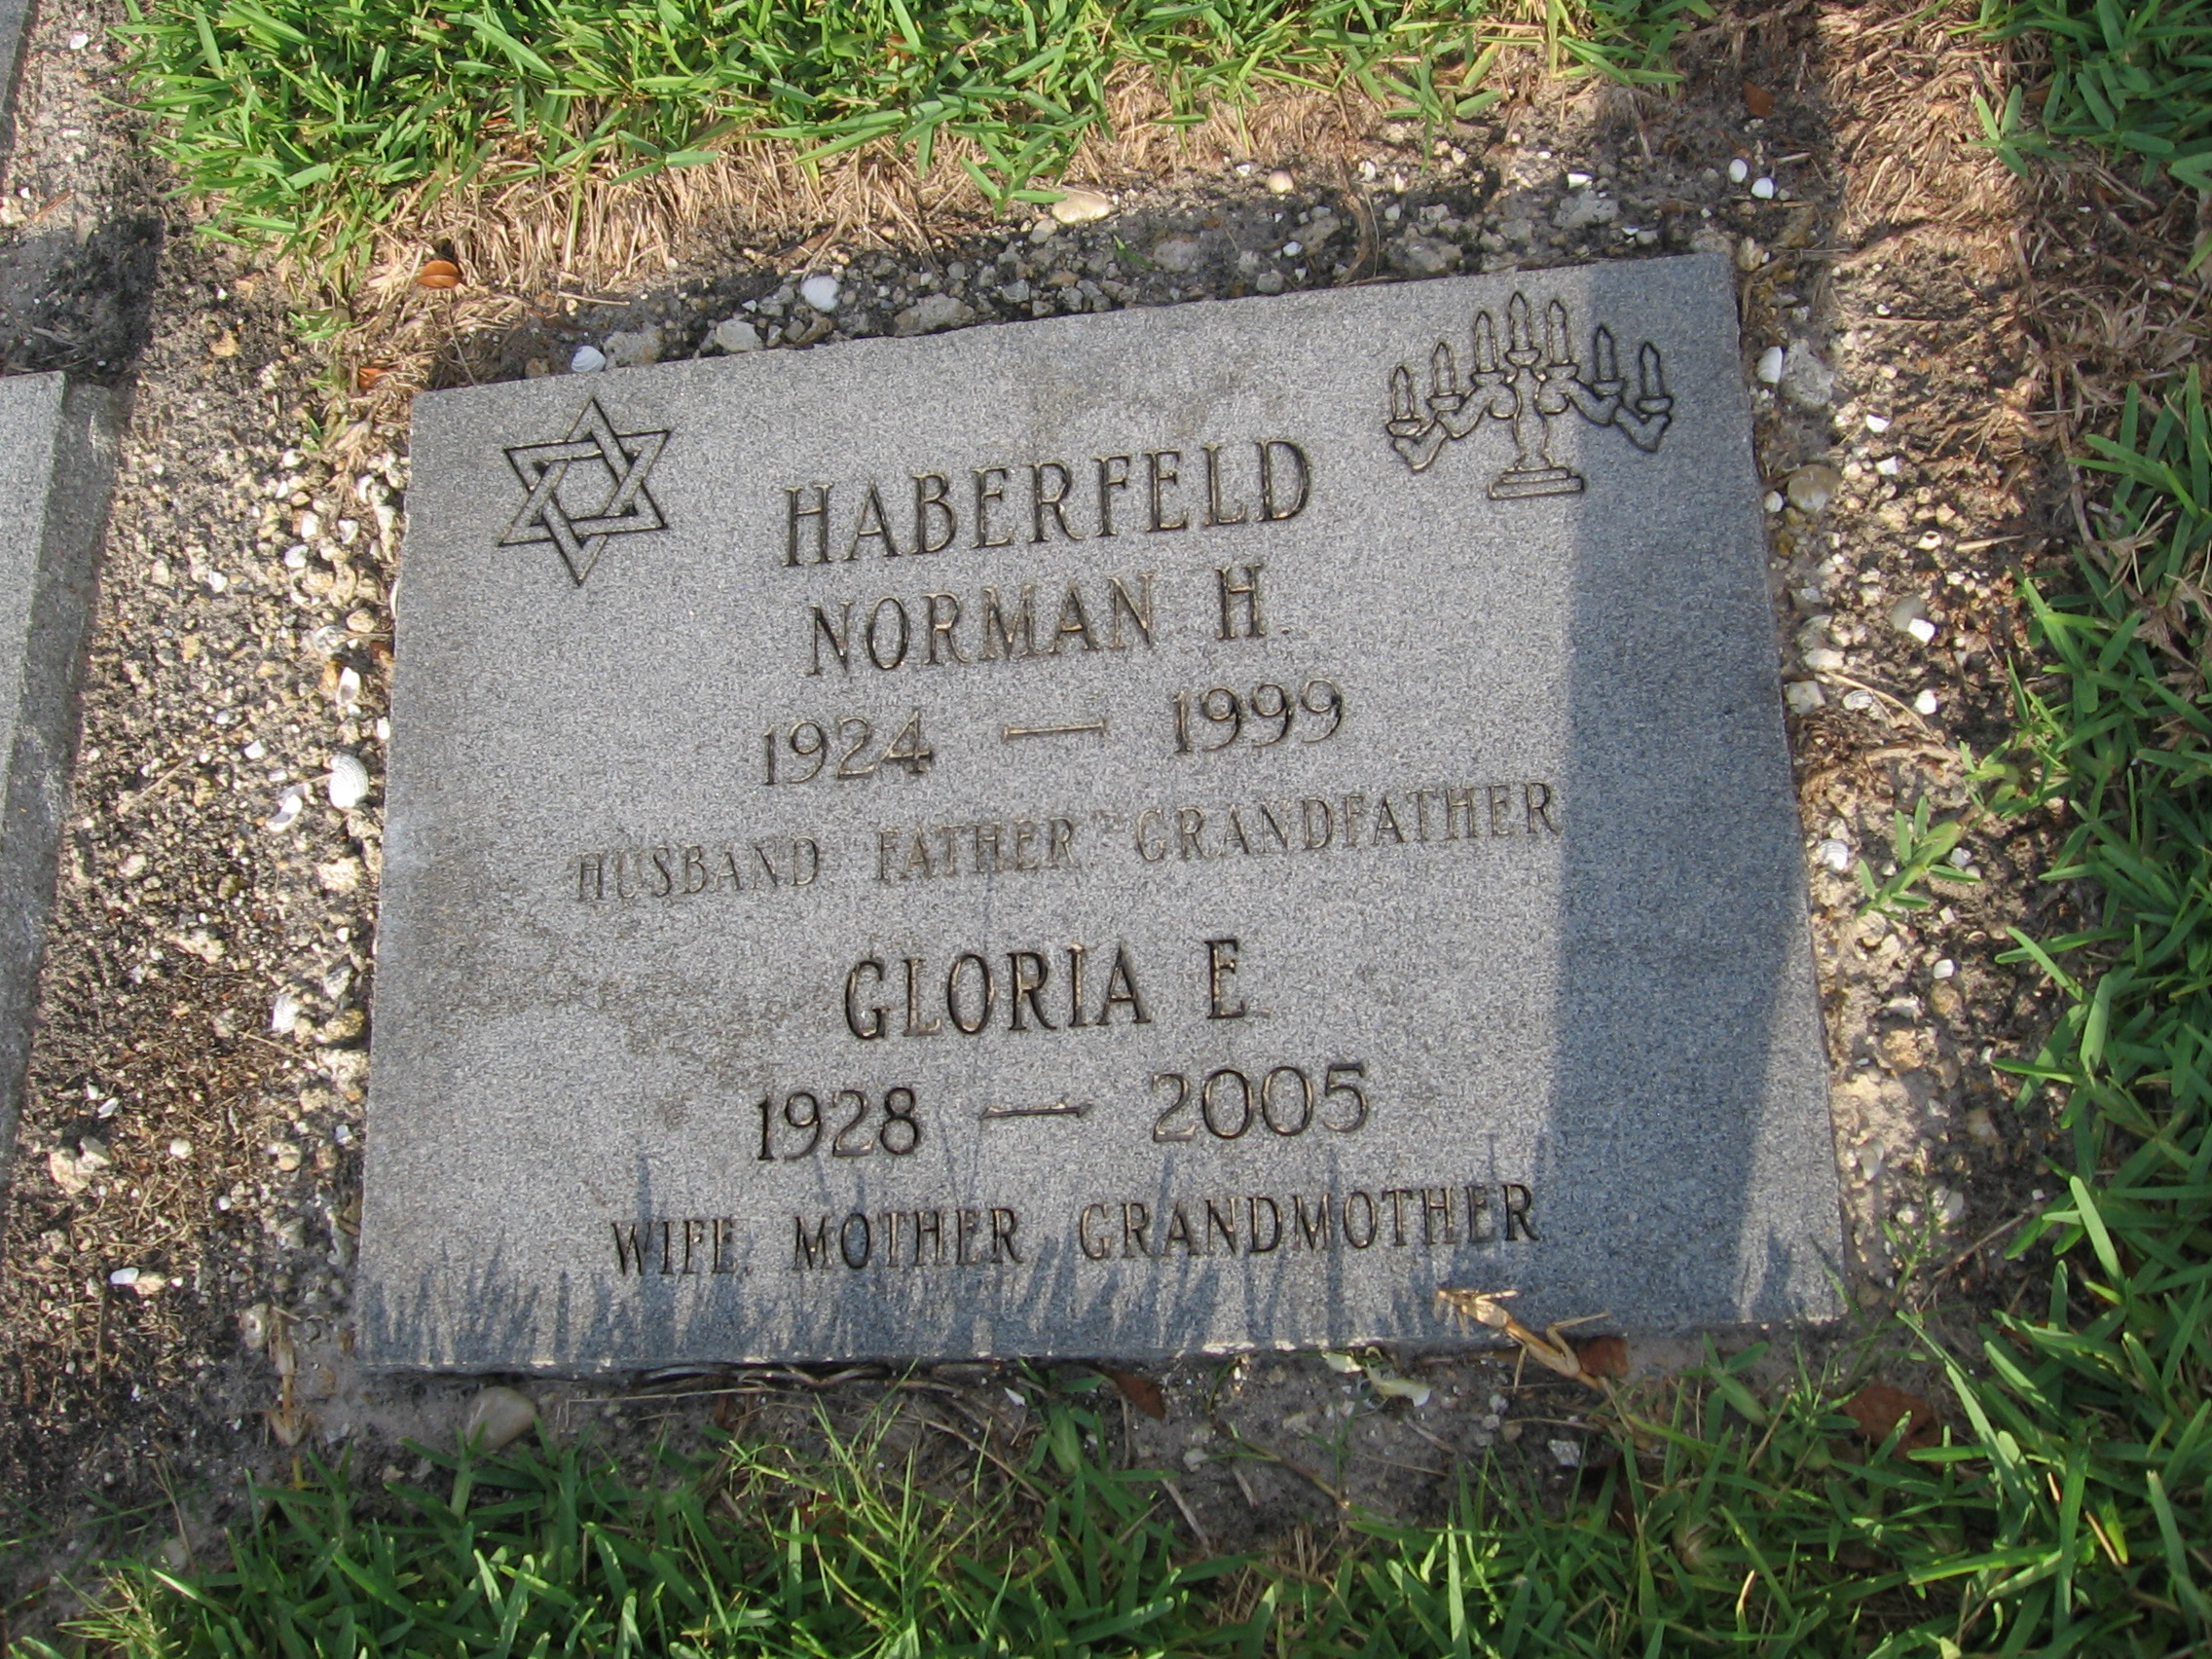 Gloria E Haberfeld